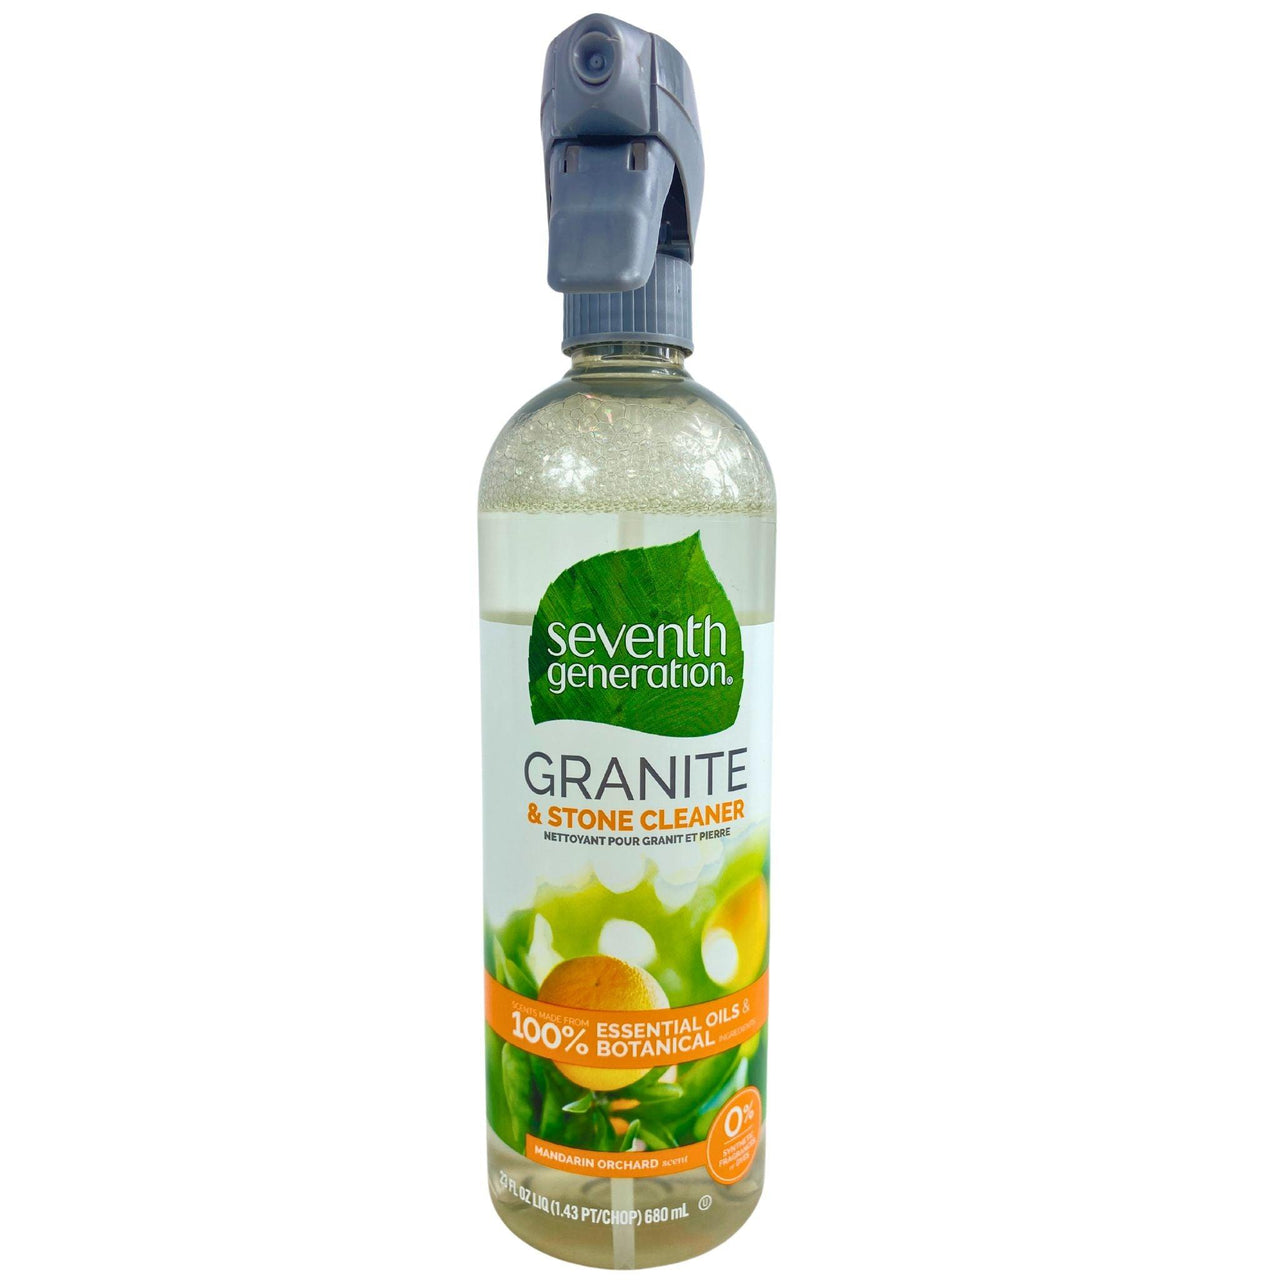 Seventh Generation Granite & Stone Cleaner 100% Essential Oils & Botanical Ingredients Mandarin Orchid Scent 23fl.oz (74 Pcs Lot) - Discount Wholesalers Inc